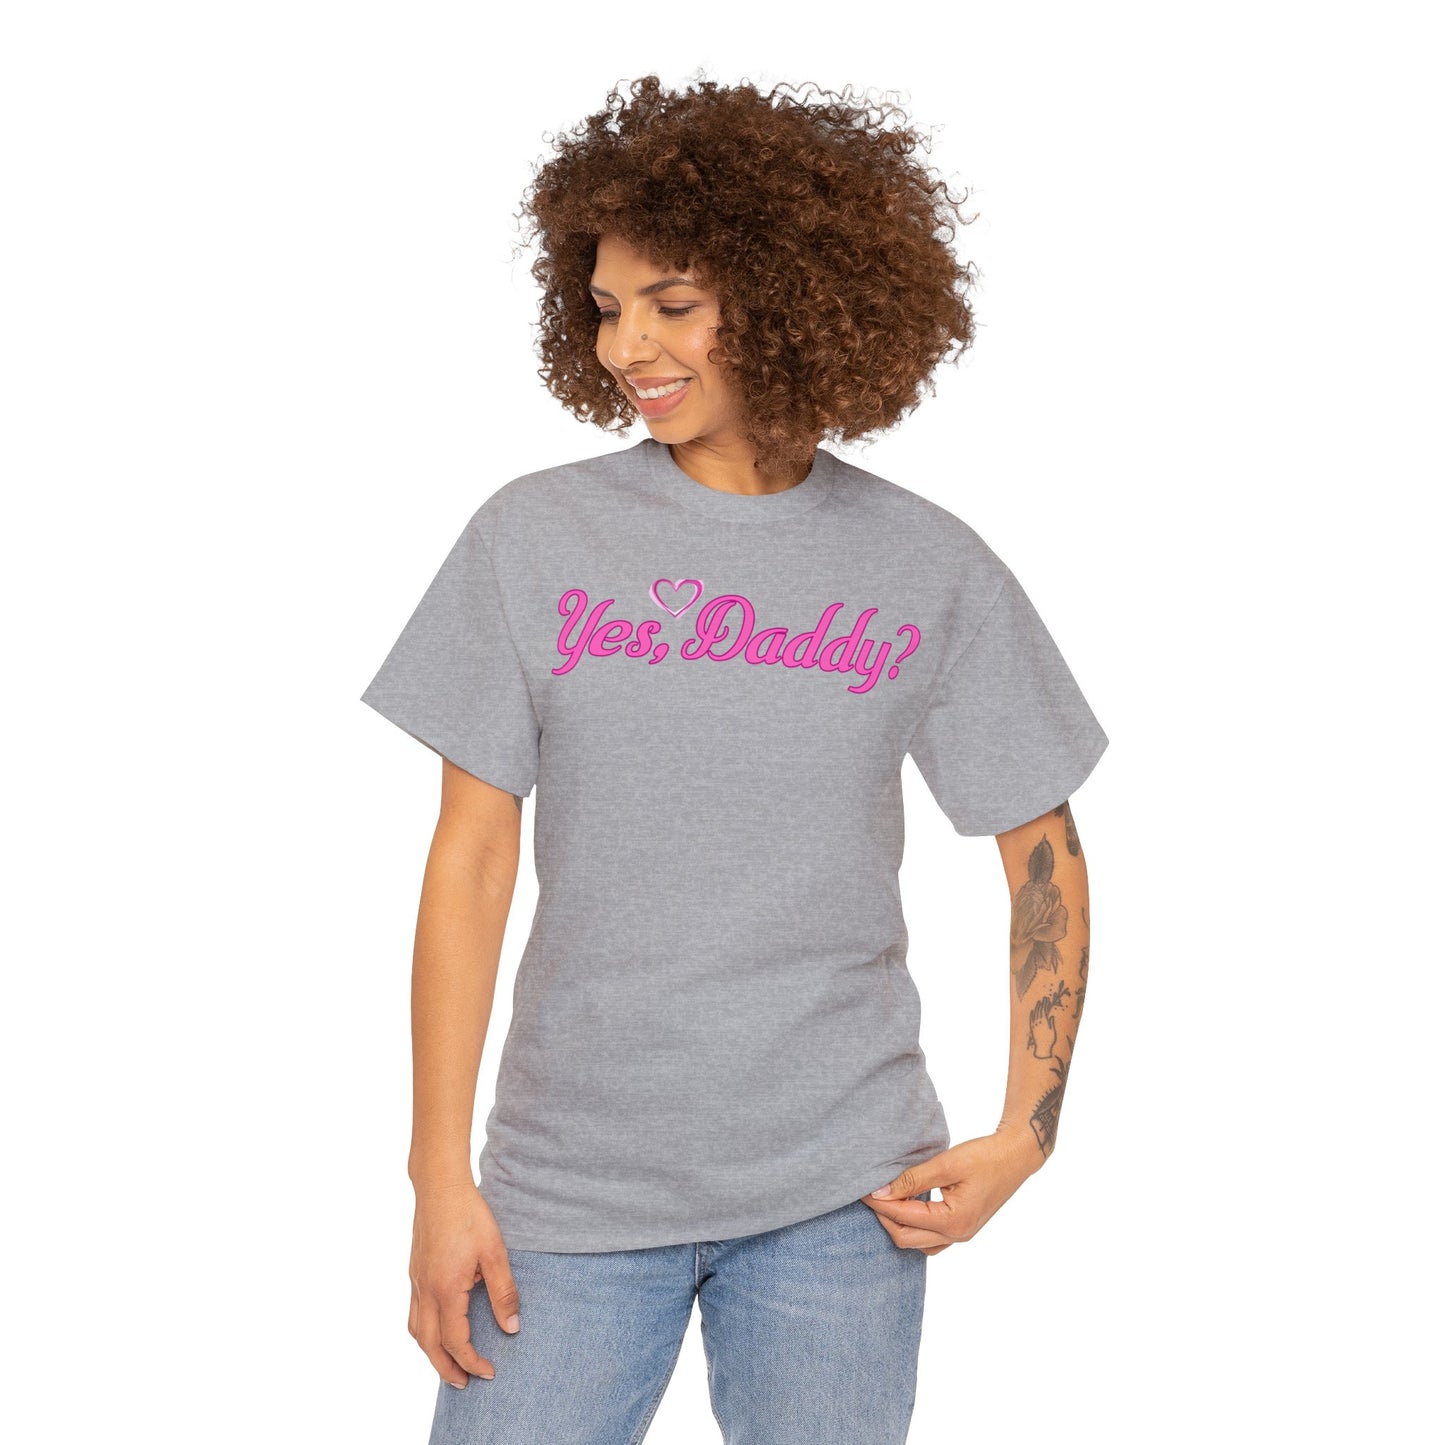 Yes Daddy Shirt | Adult Shirt | Sexy Shirt | BDSM Shirt | Kinky Shirt | BDSM Clothing | Submissive Clothing | DDlg | Dominant Shirt